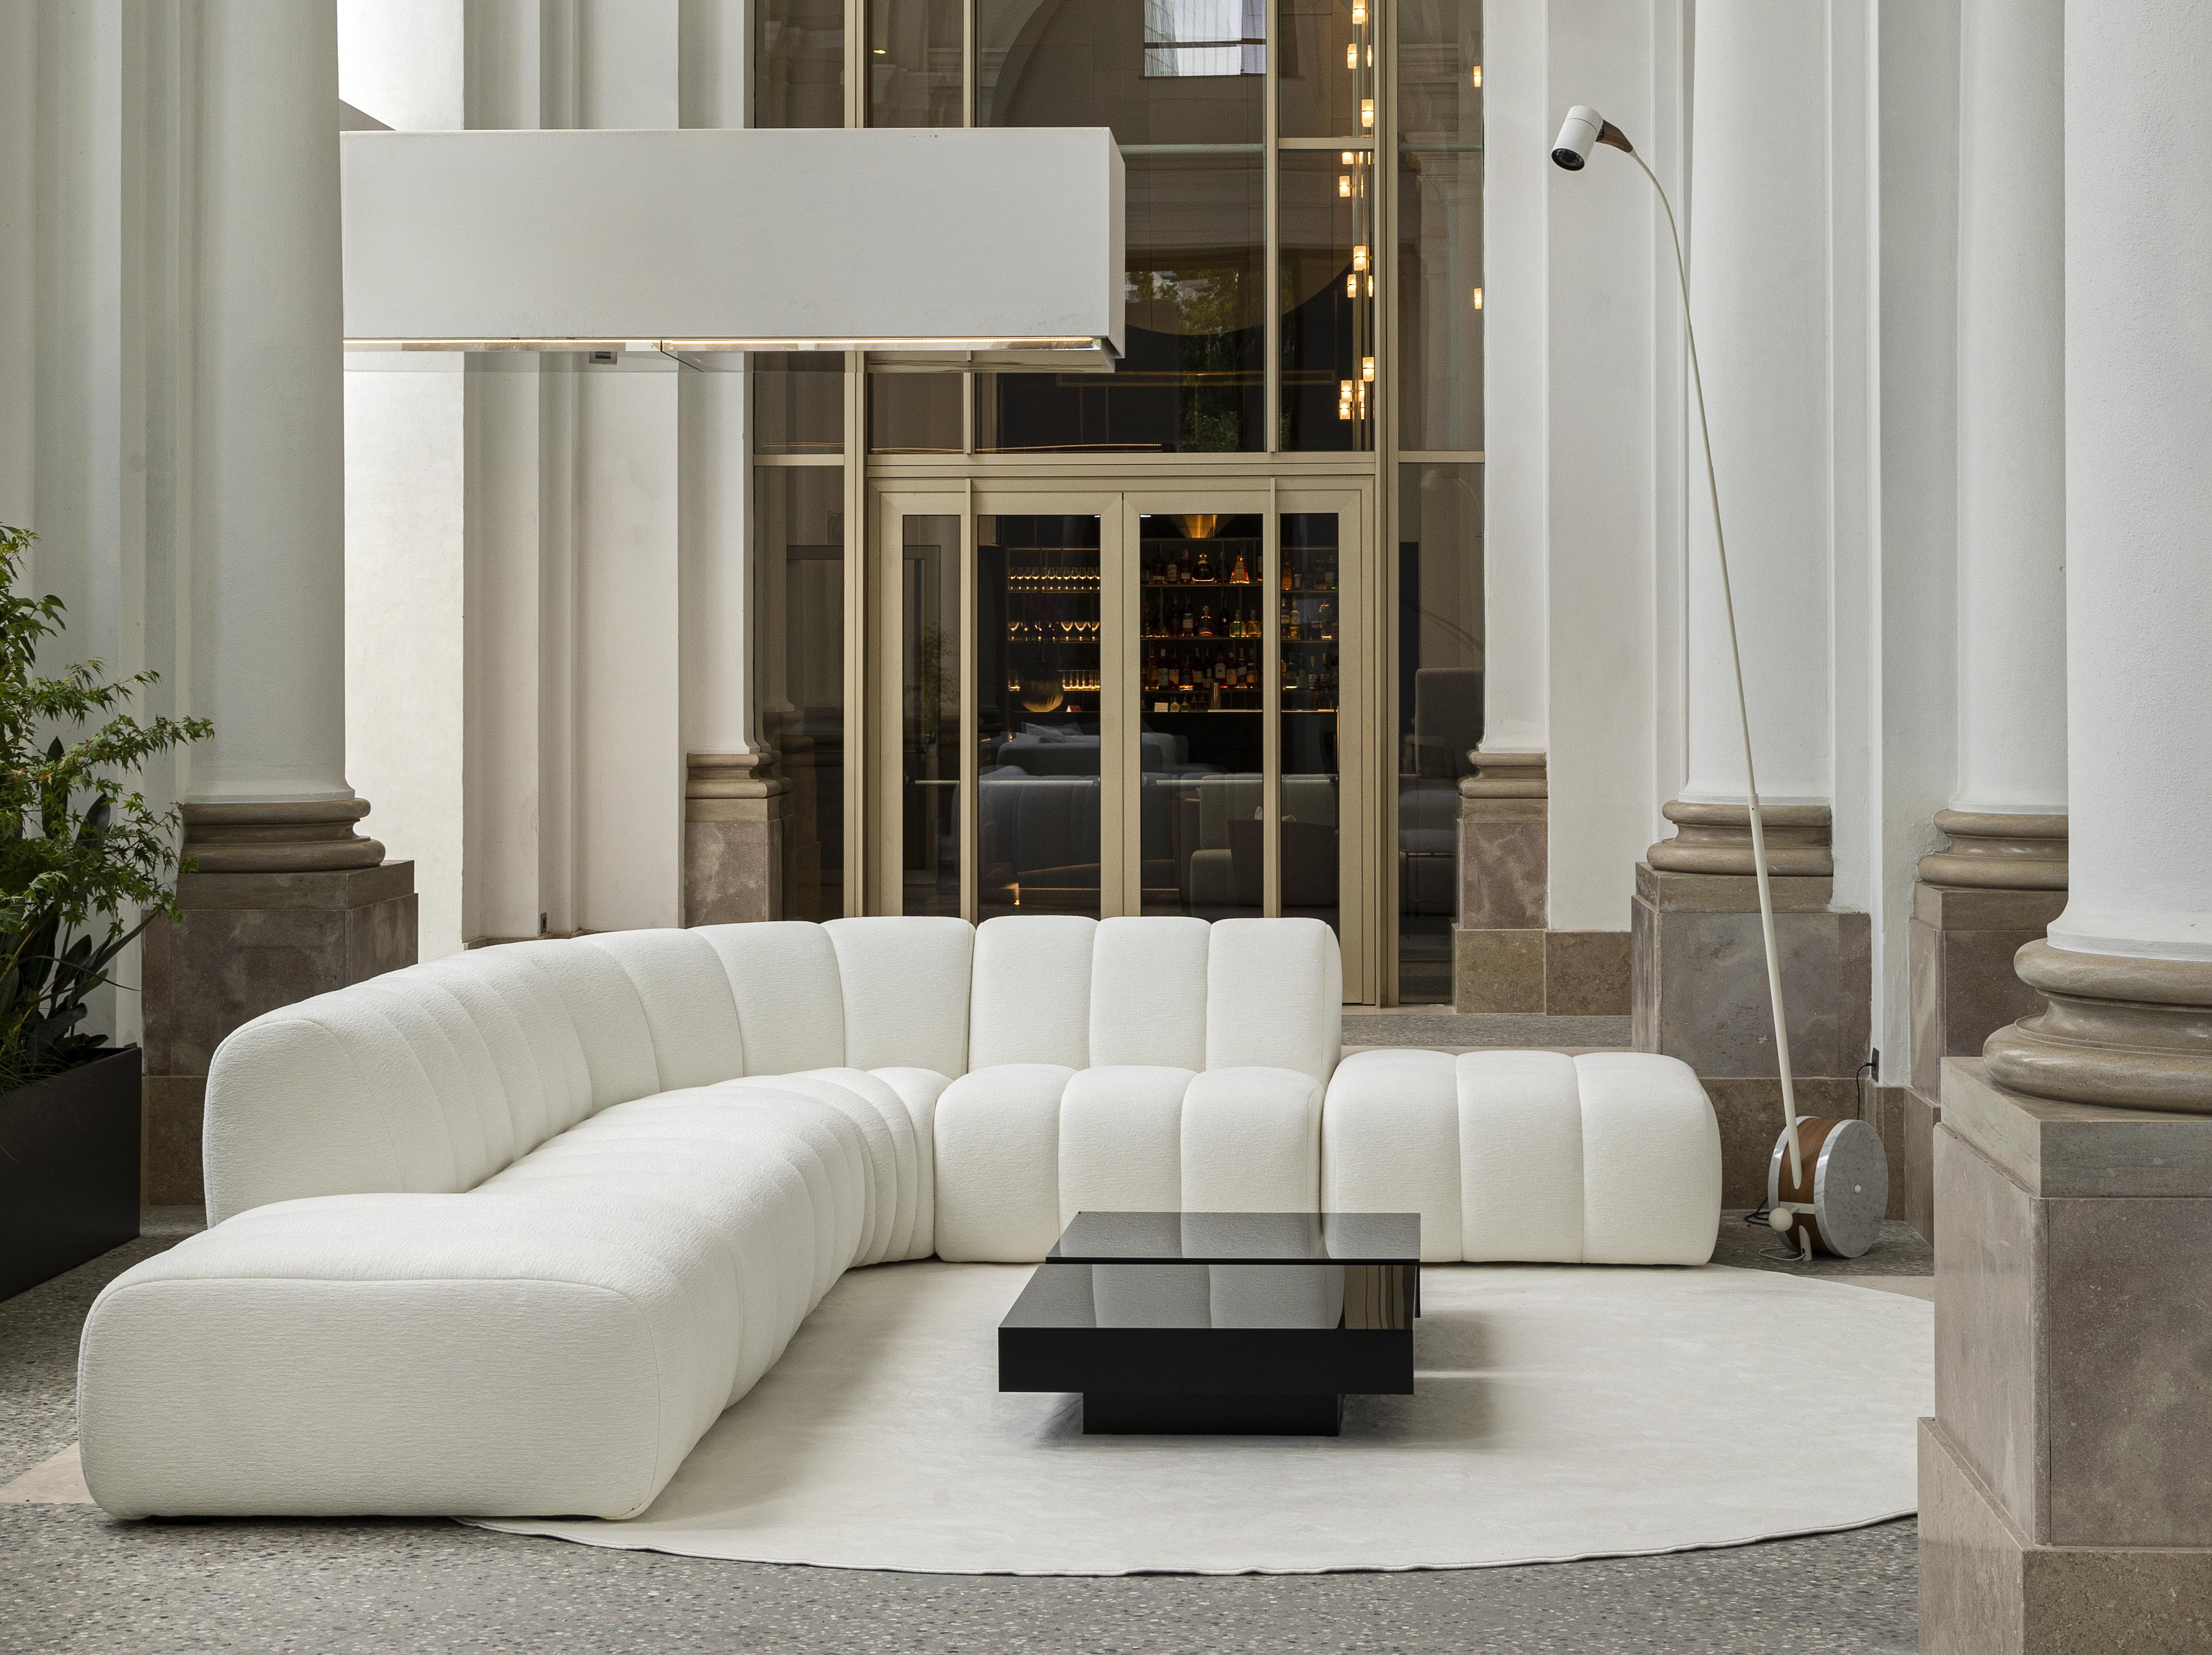 Fabric DACCAPO modular sofa by Legame Italia, in white fabric. Basic module. For Sale